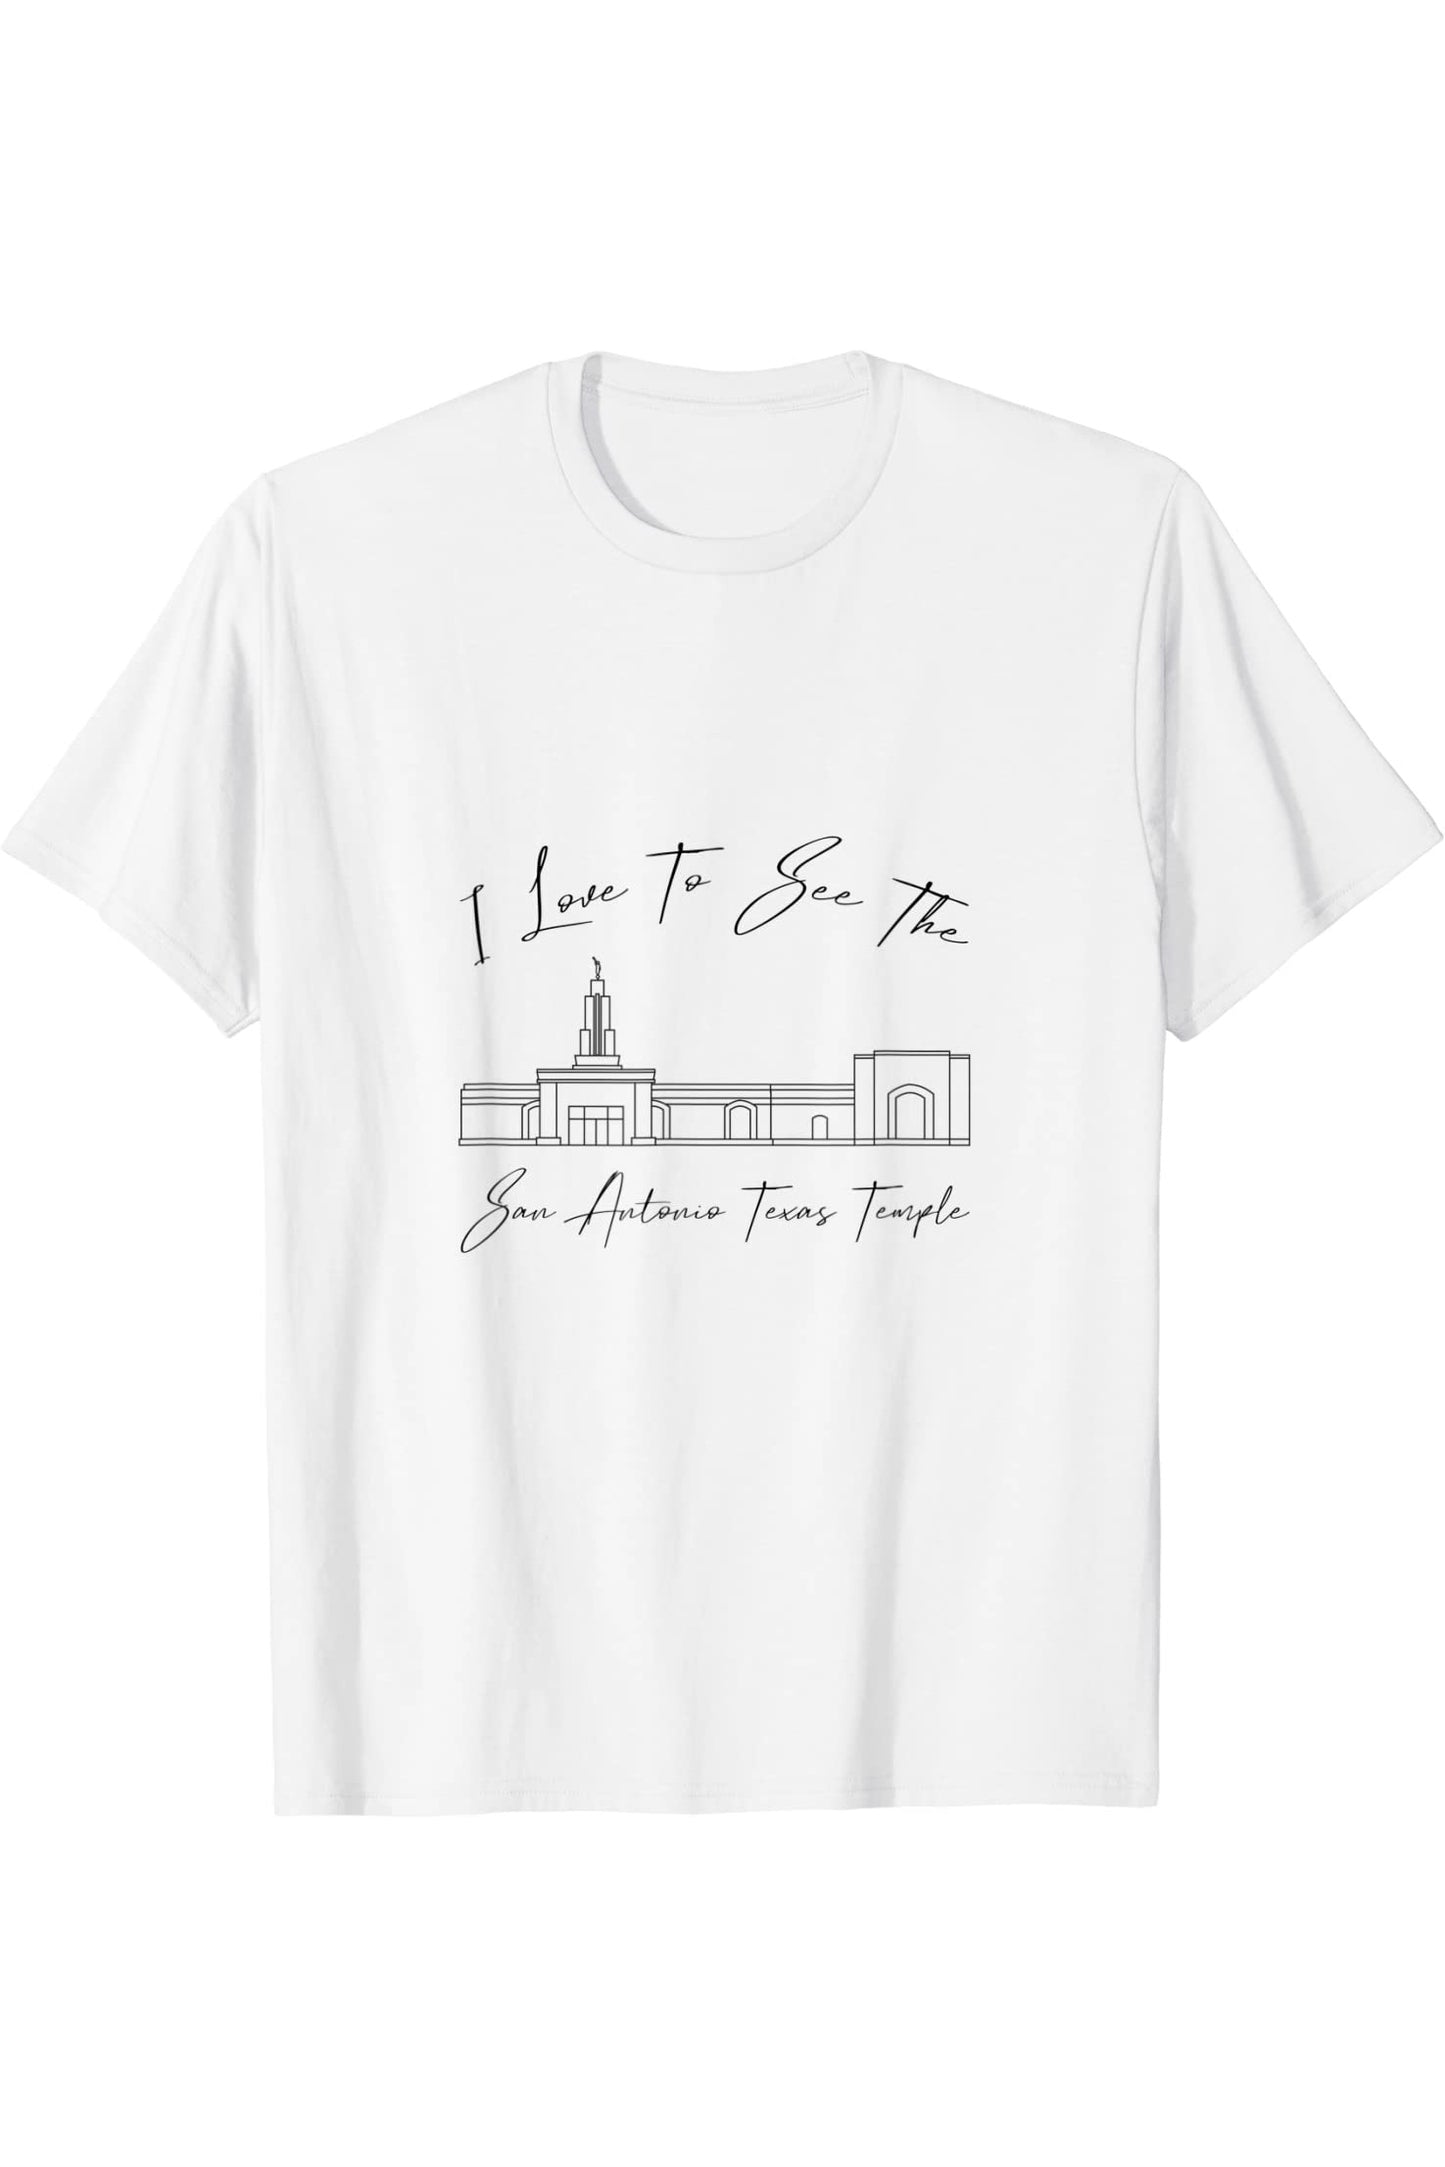 San Antonio Texas Temple T-Shirt - Calligraphy Style (English) US